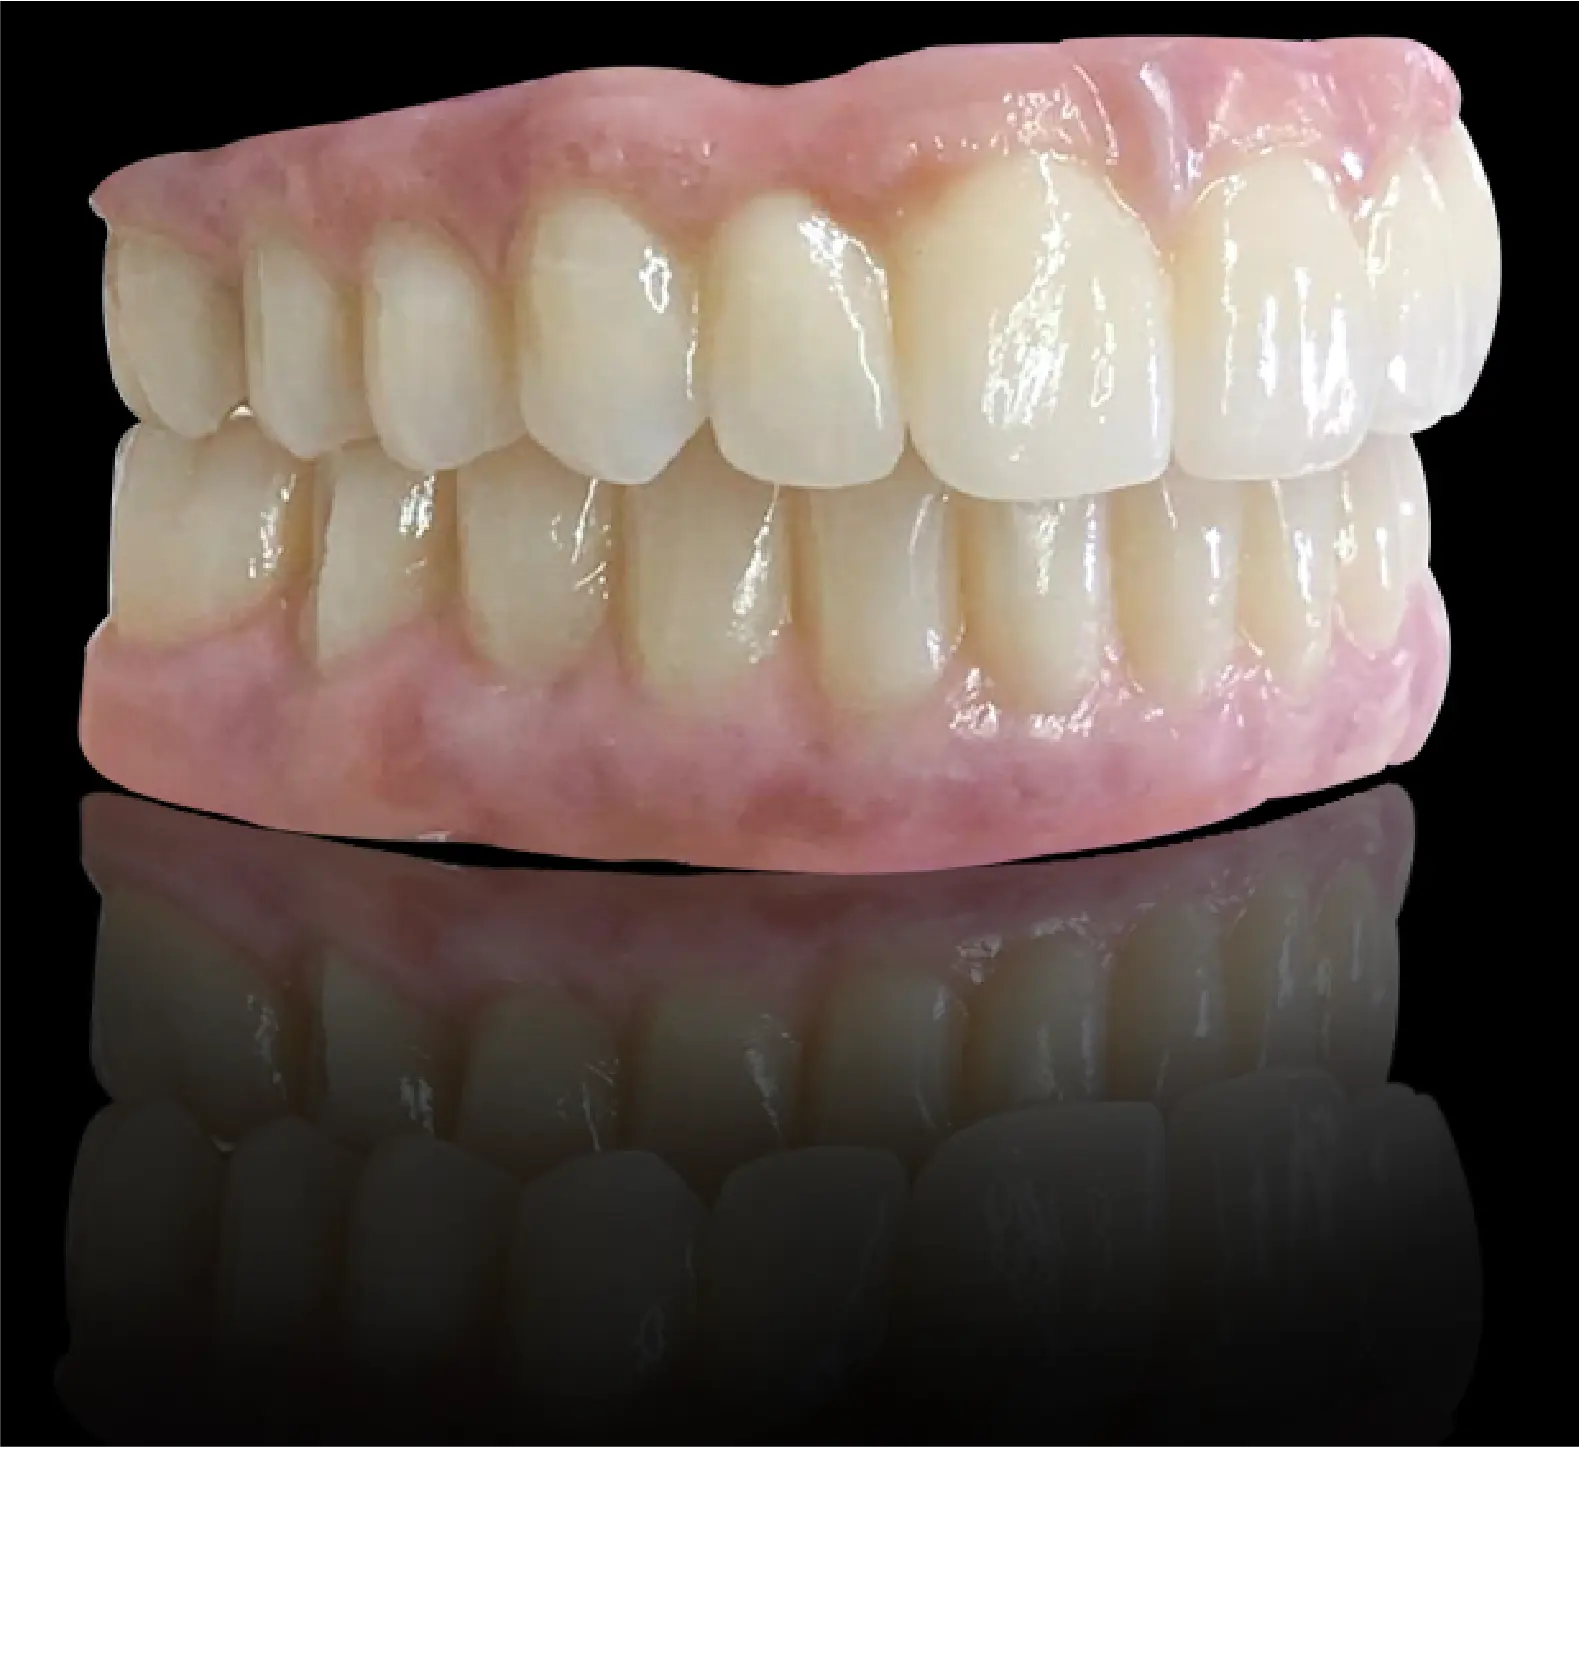 Bloom den Dental Lab Cad Cam Materialien Zirkon oxid blöcke 3D Mehr schicht iger vor schattierter Zirkonoxid-Dental block für Open System Milling Mac